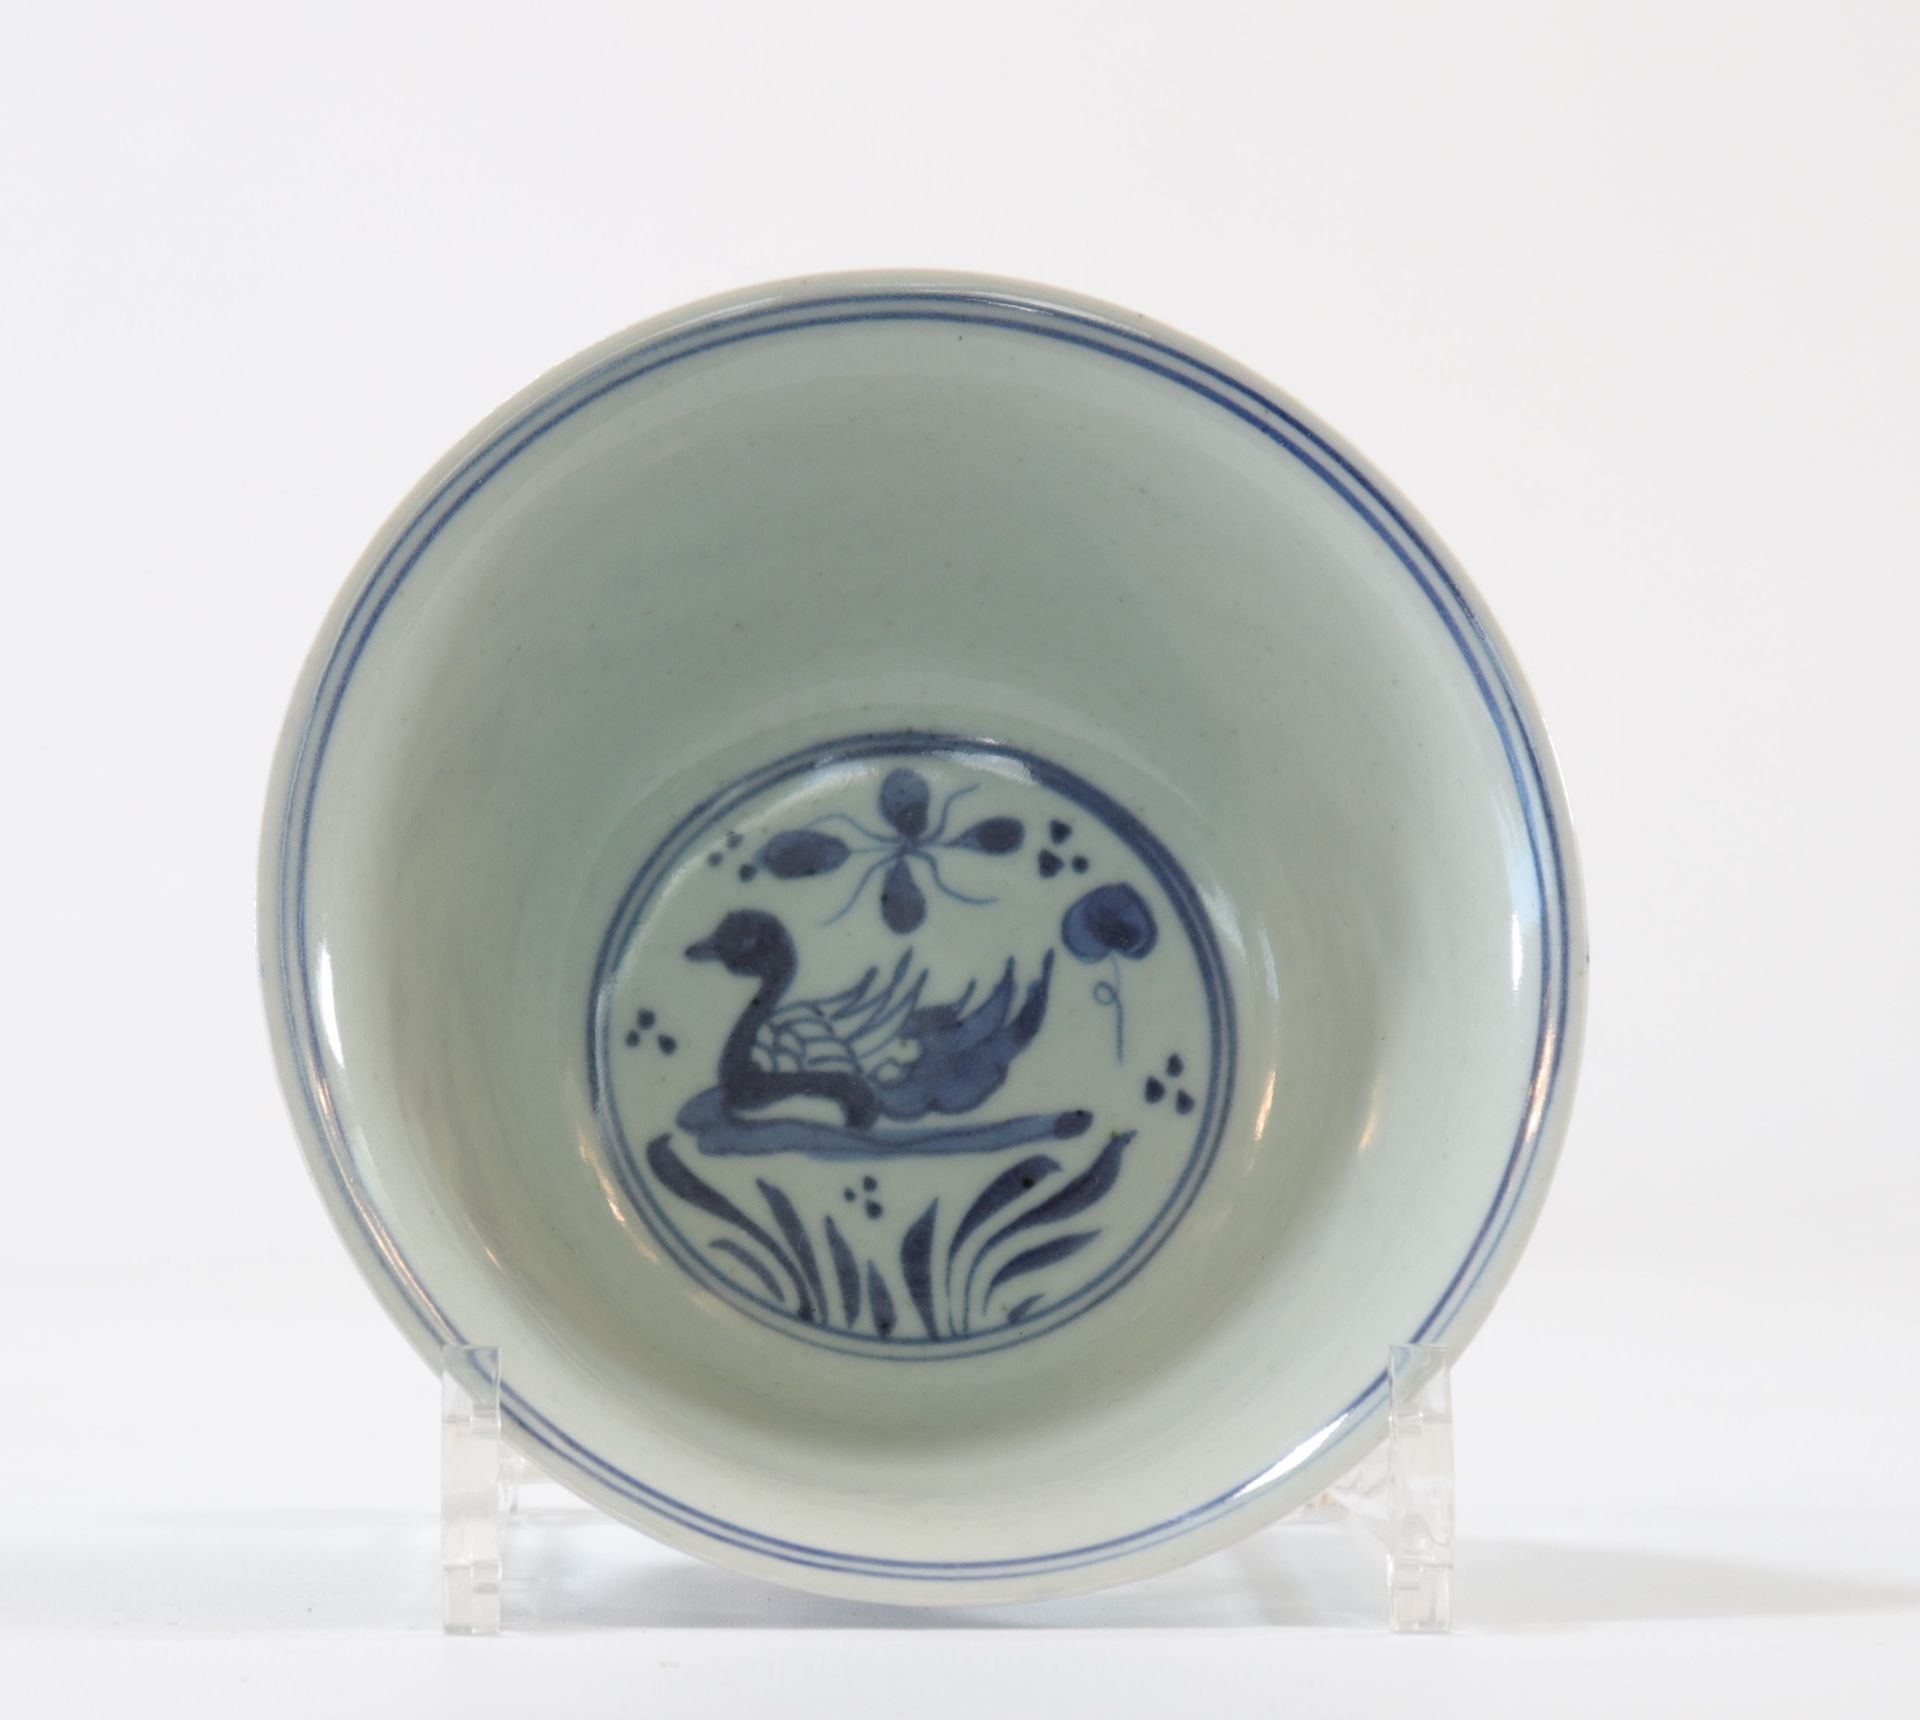 China porcelain bowl white blue mark under the piece - Image 4 of 4